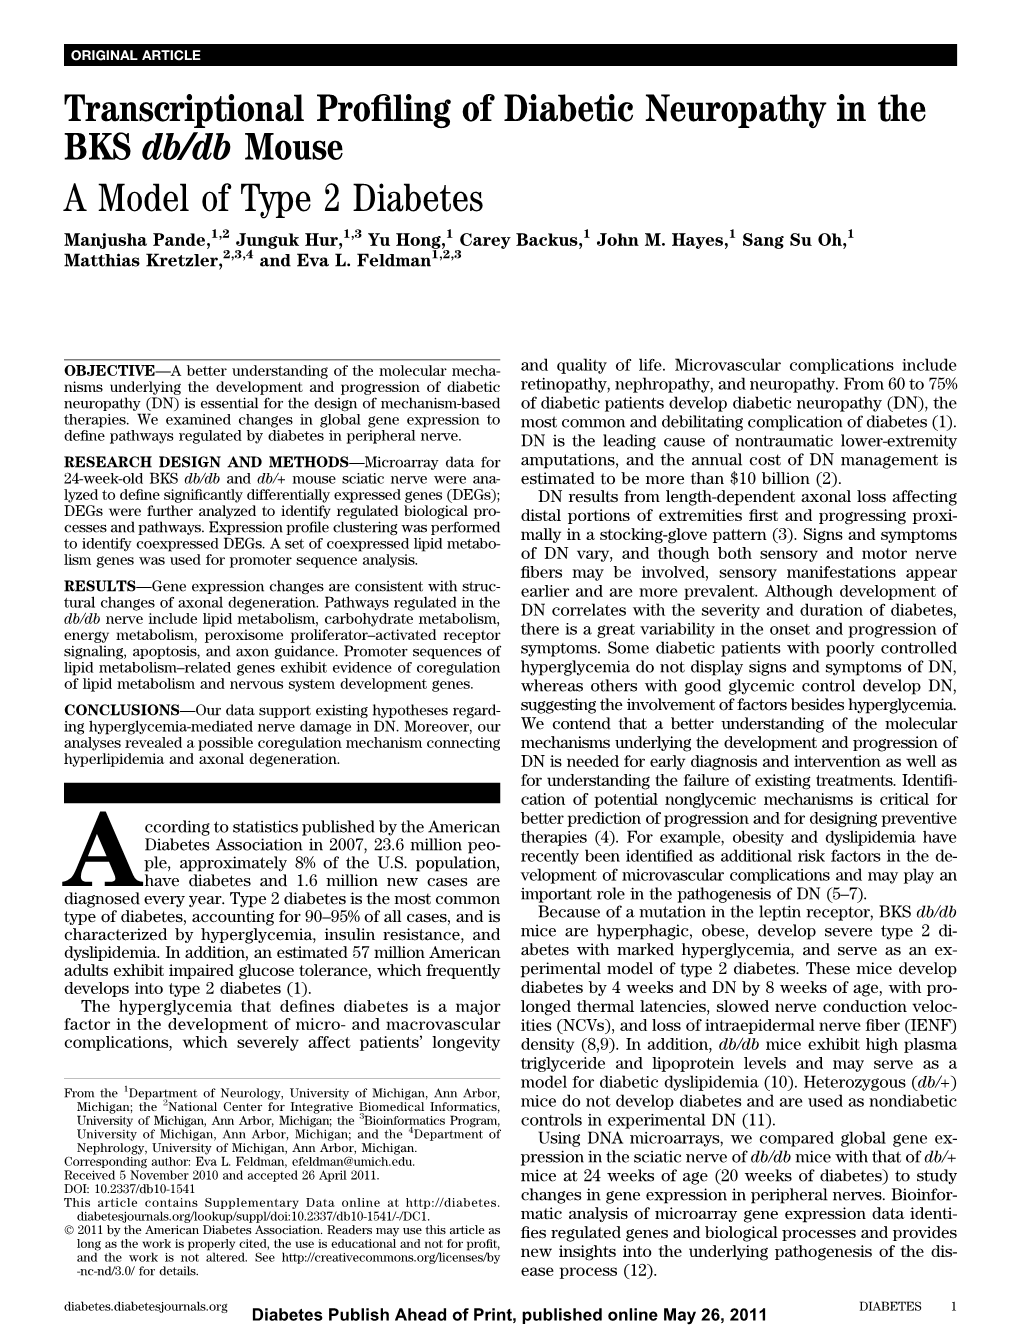 A Model of Type 2 Diabetes